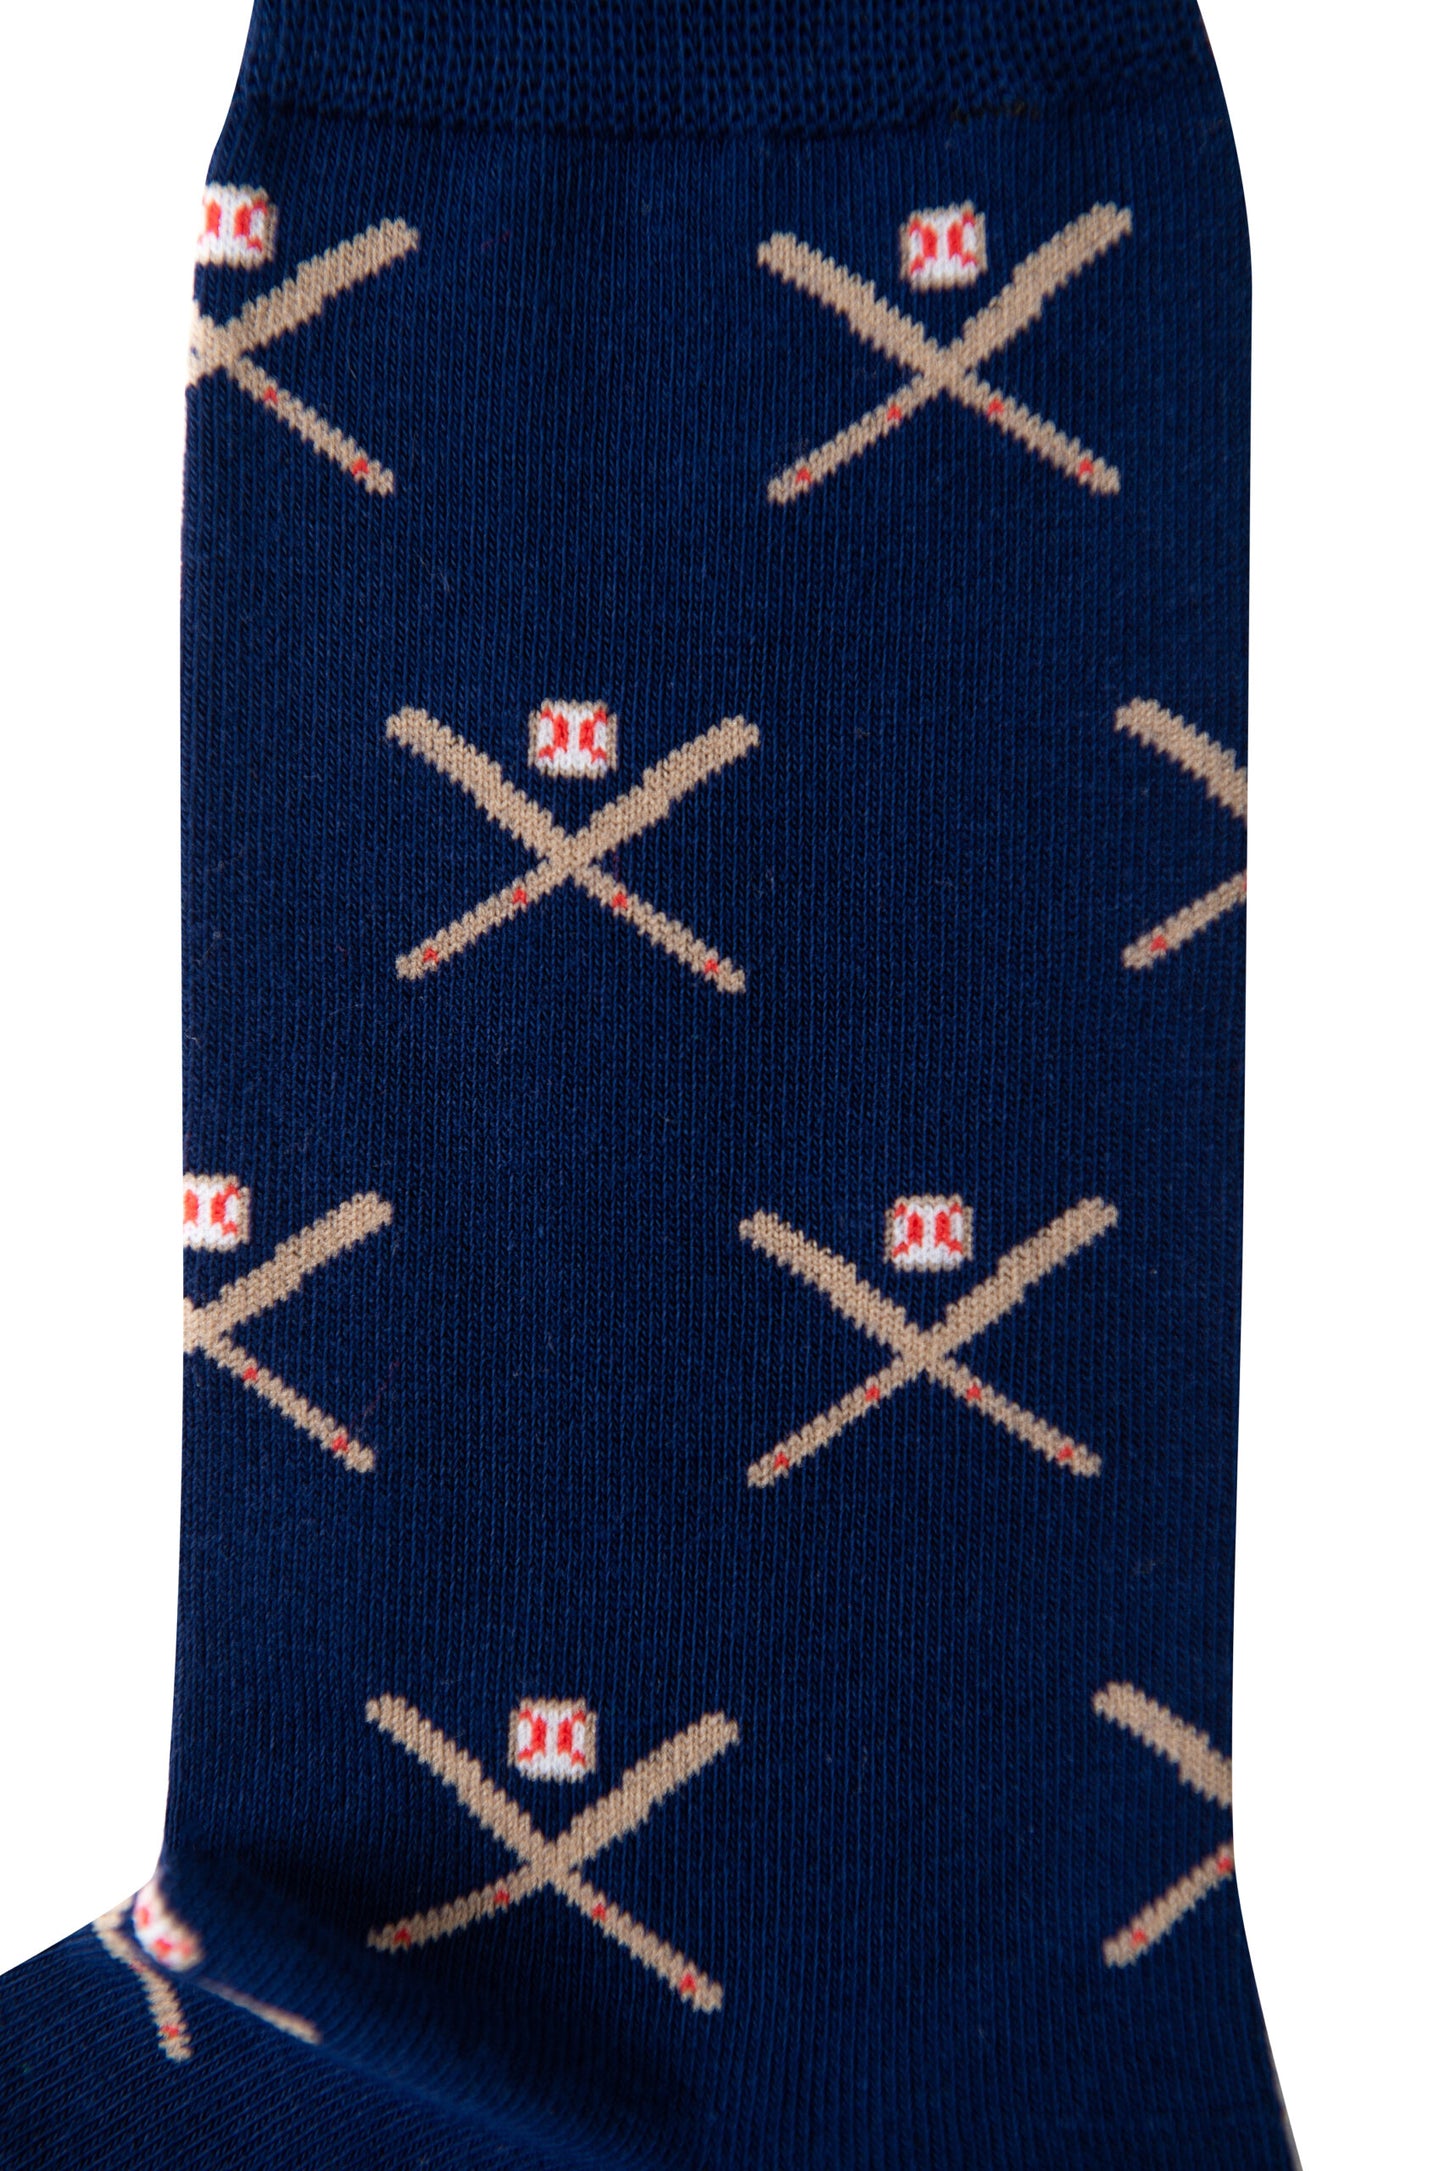 A unique pair of Crossed Baseball Socks featuring baseball bats.